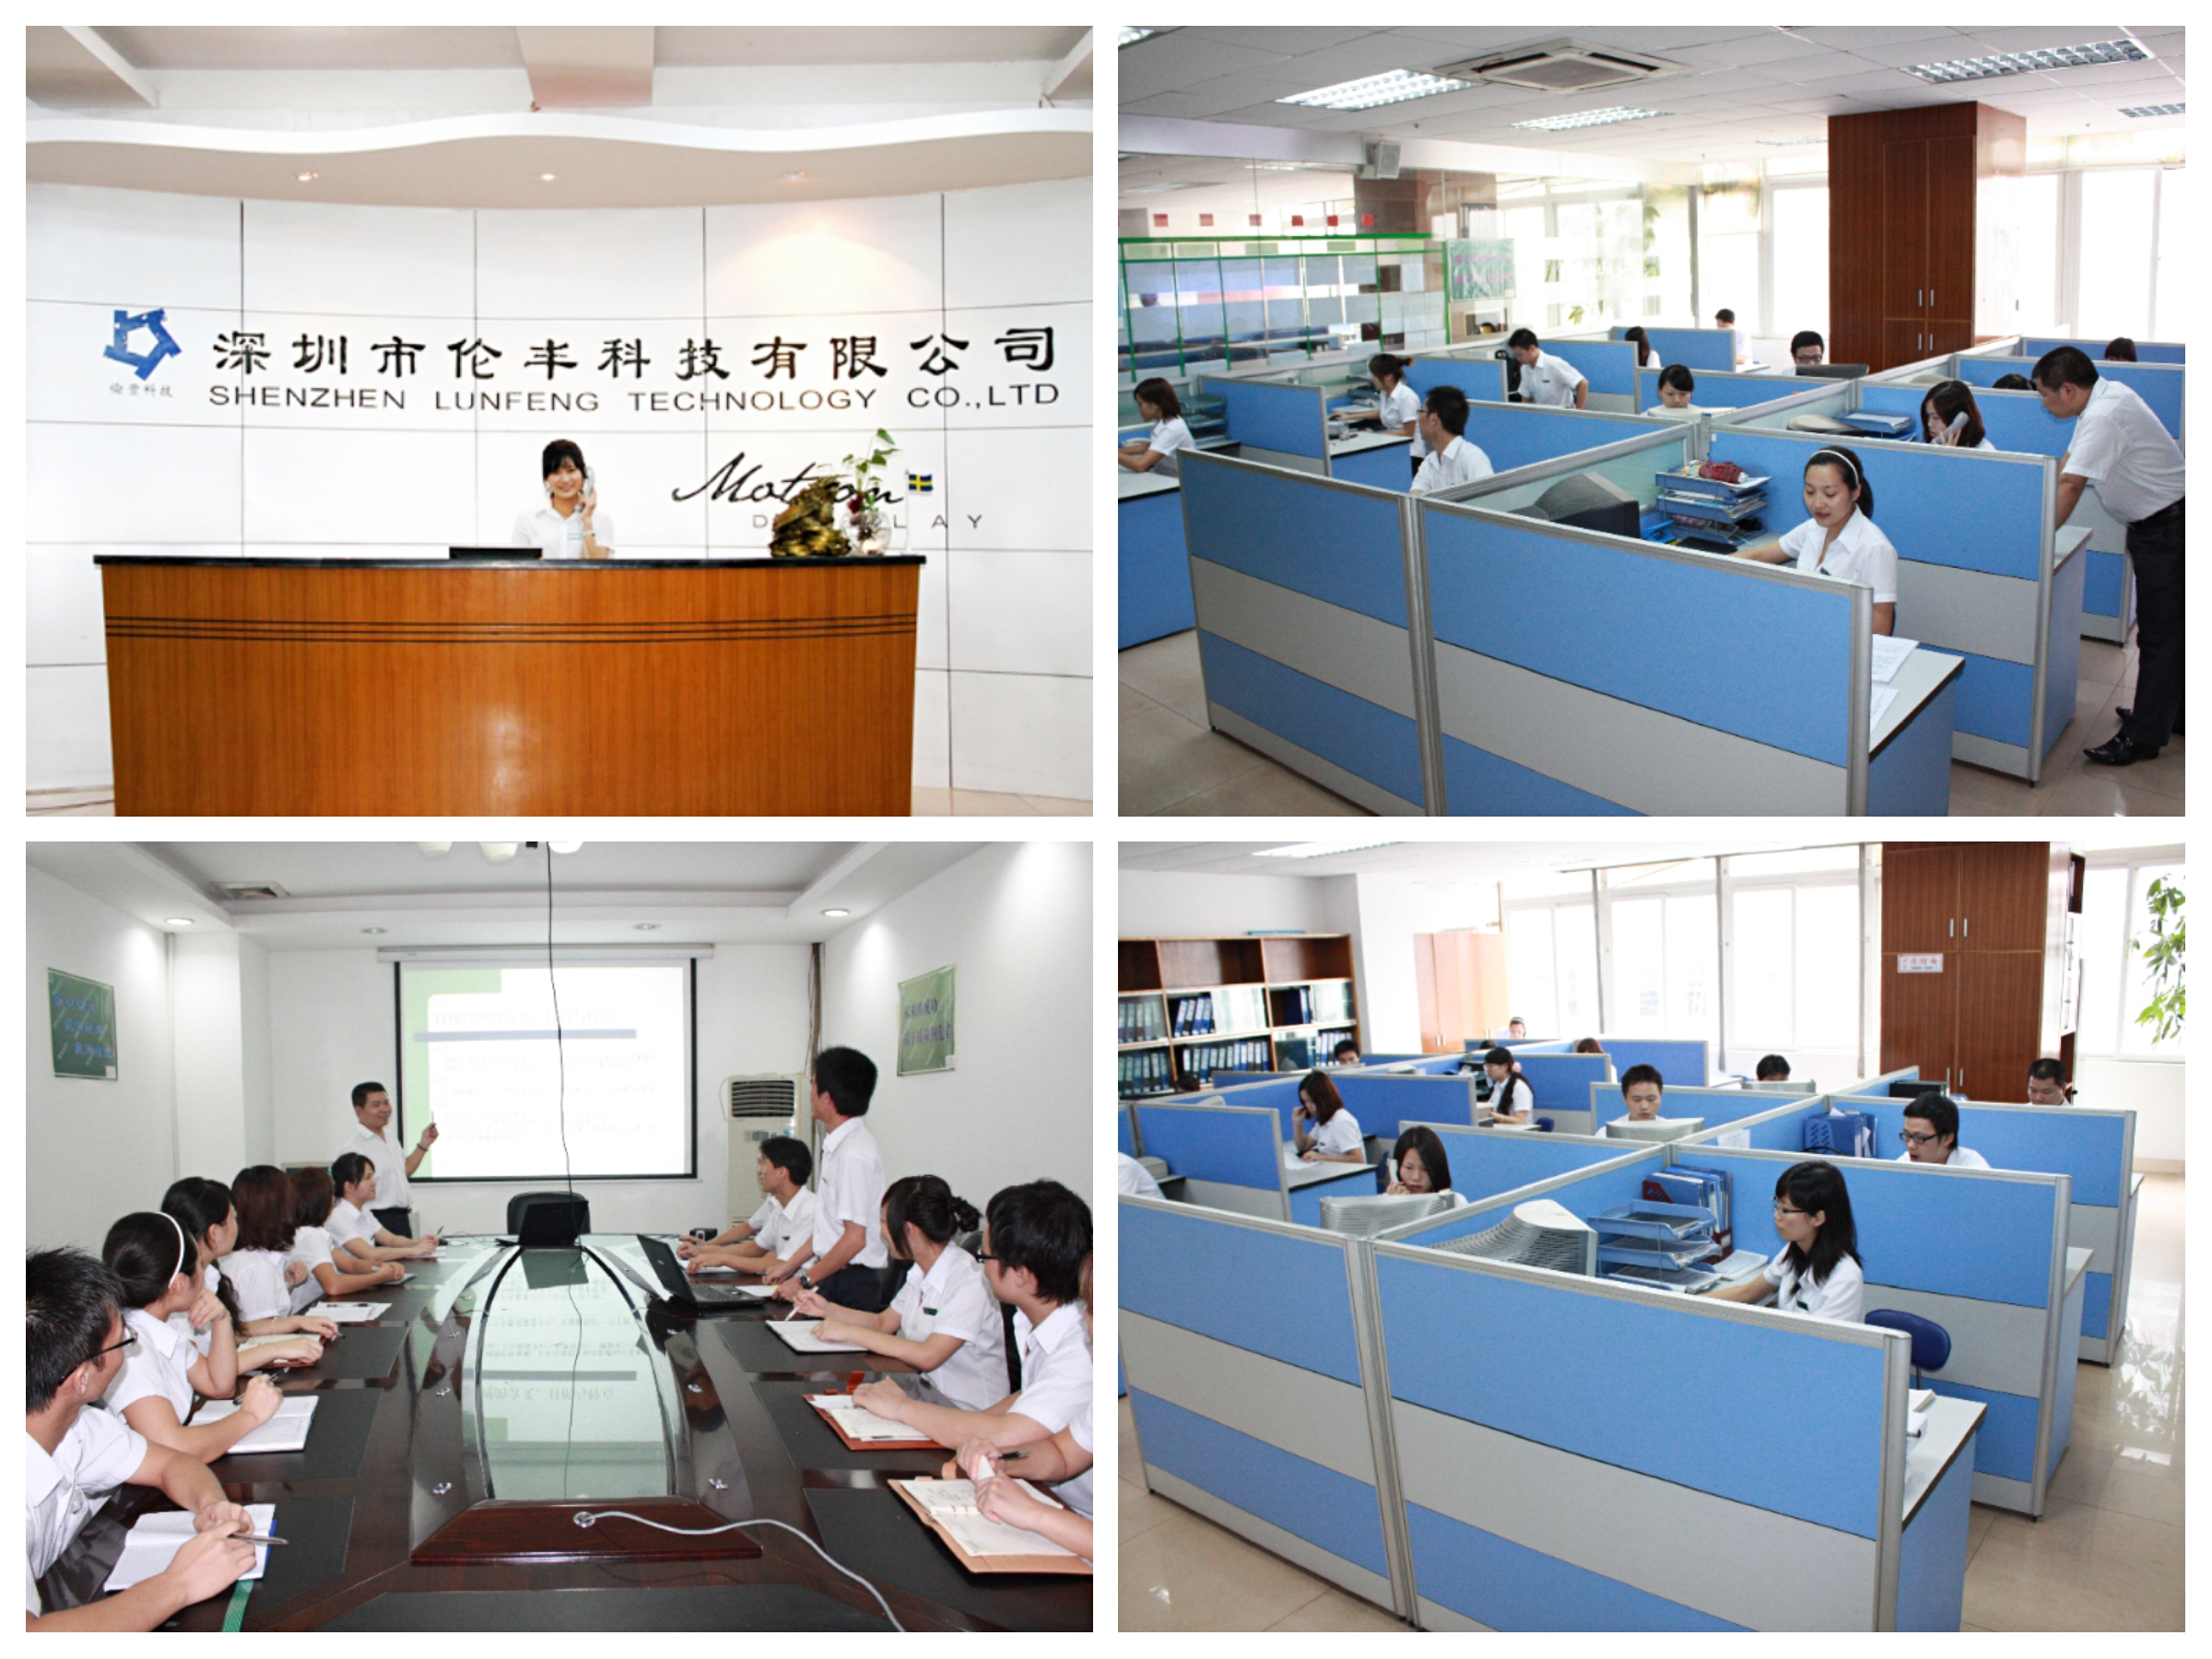 Shenzhen Lunfeng Technology Co., Ltd.